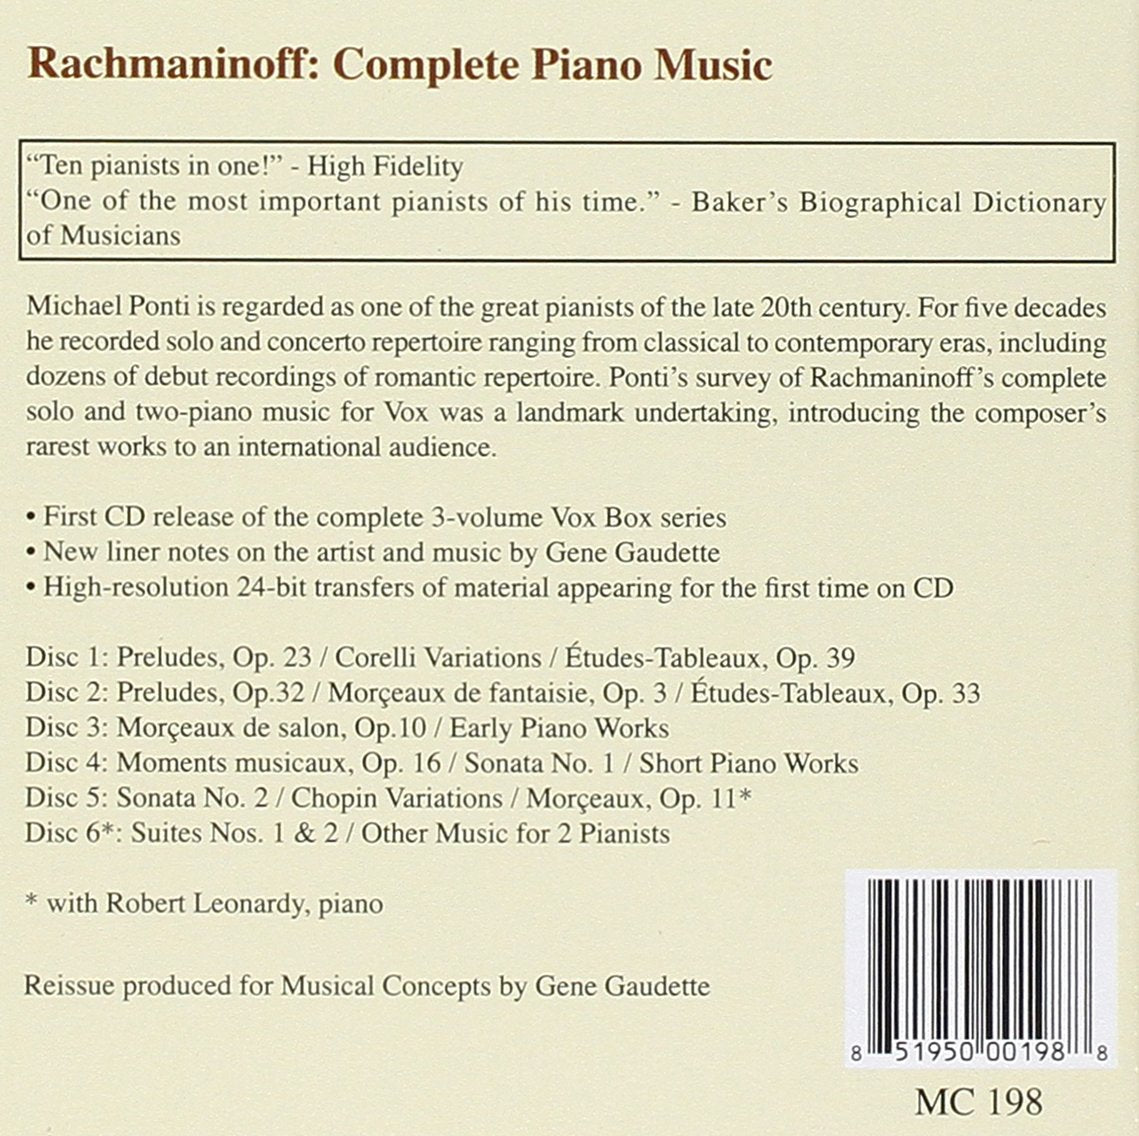 RACHMANINOFF: COMPLETE PIANO MUSIC - MICHAEL PONTI (6 CDS)